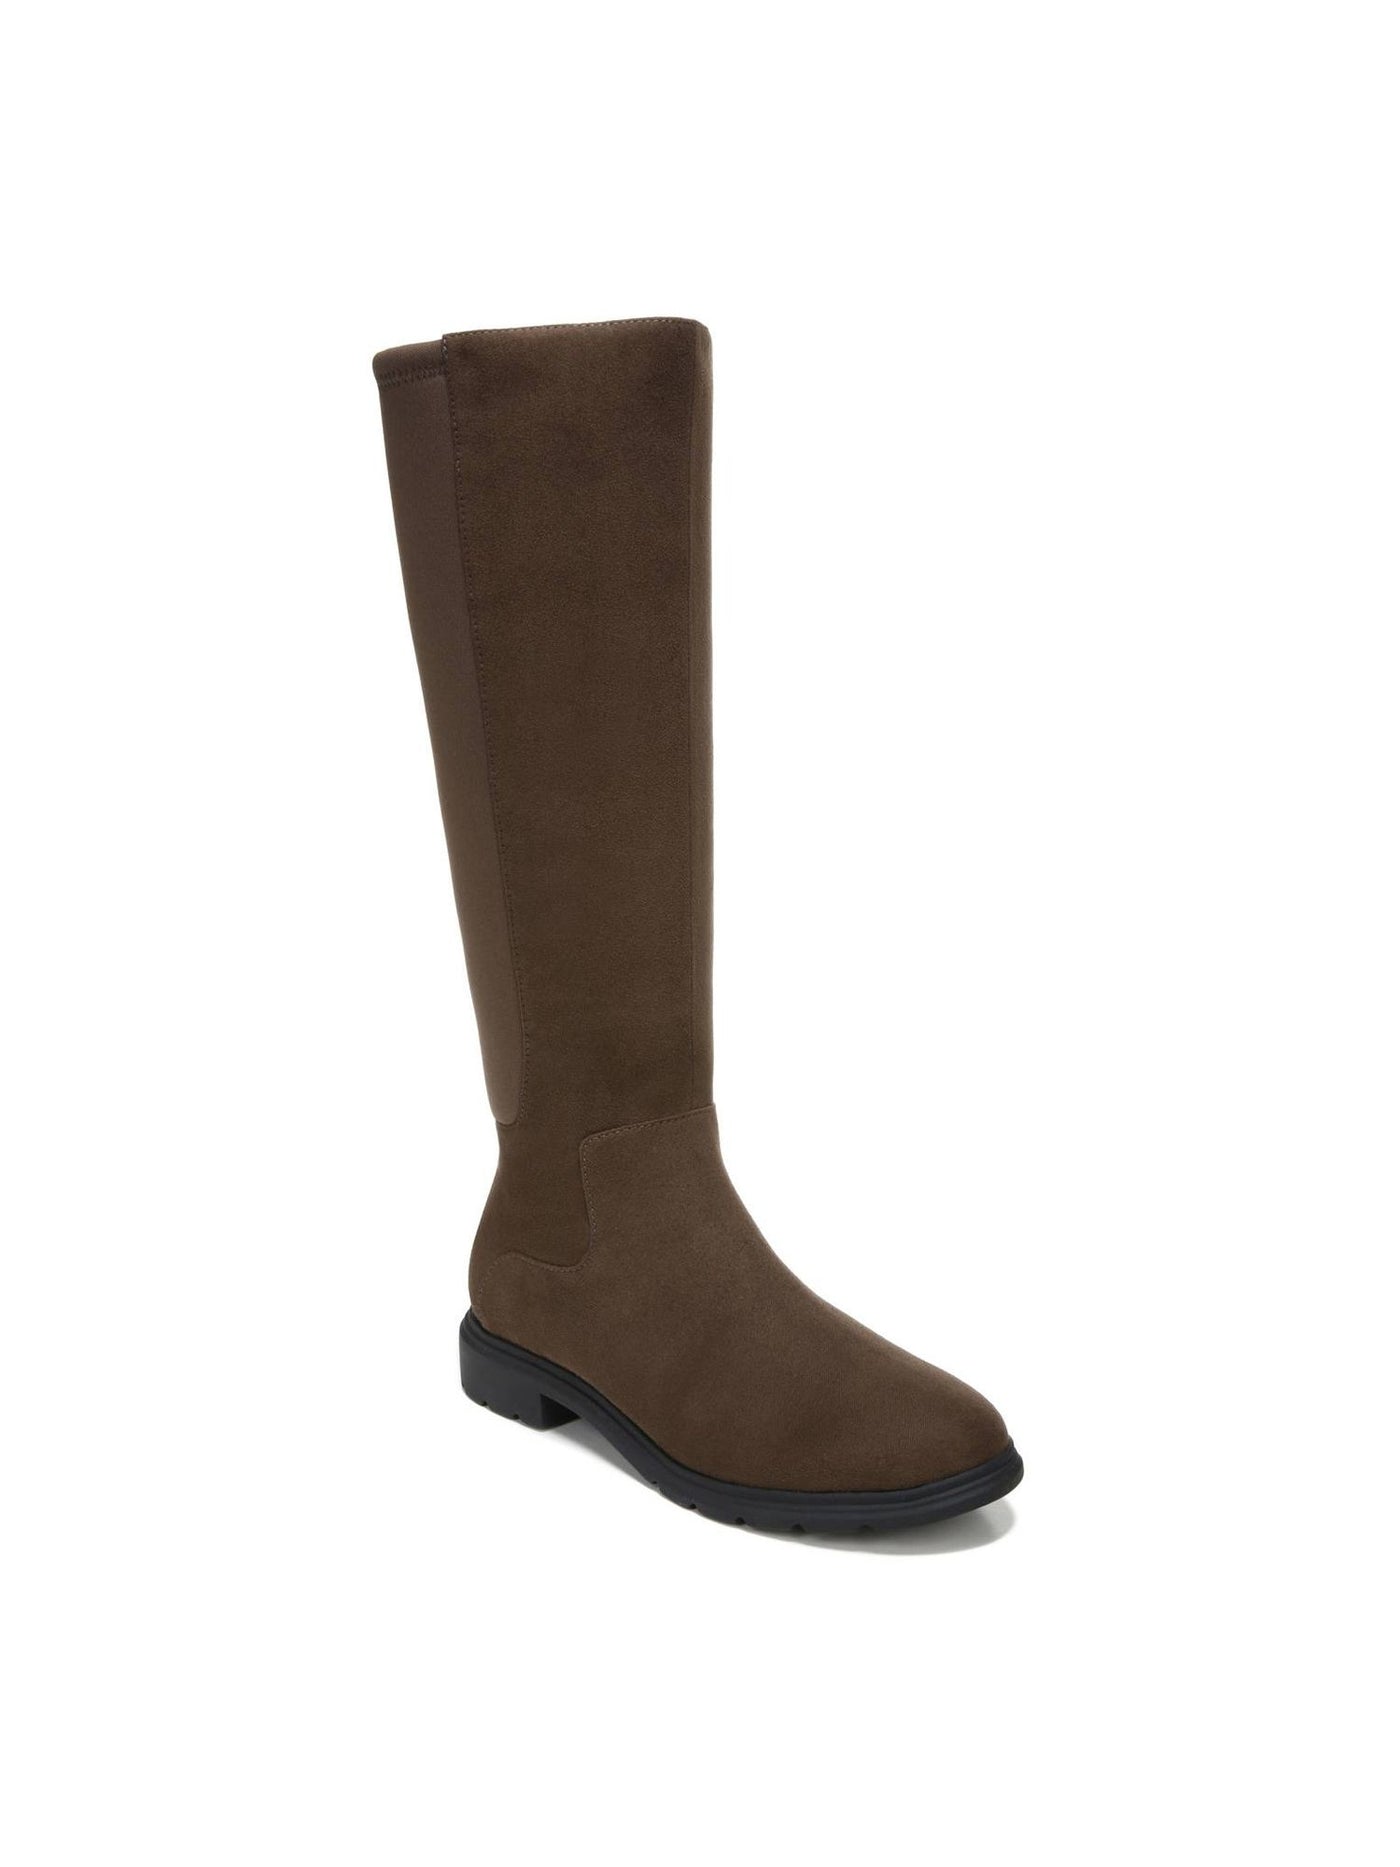 DR SCHOLLS Womens Brown Cushioned New Start Almond Toe Block Heel Zip-Up Boots Shoes 9 M